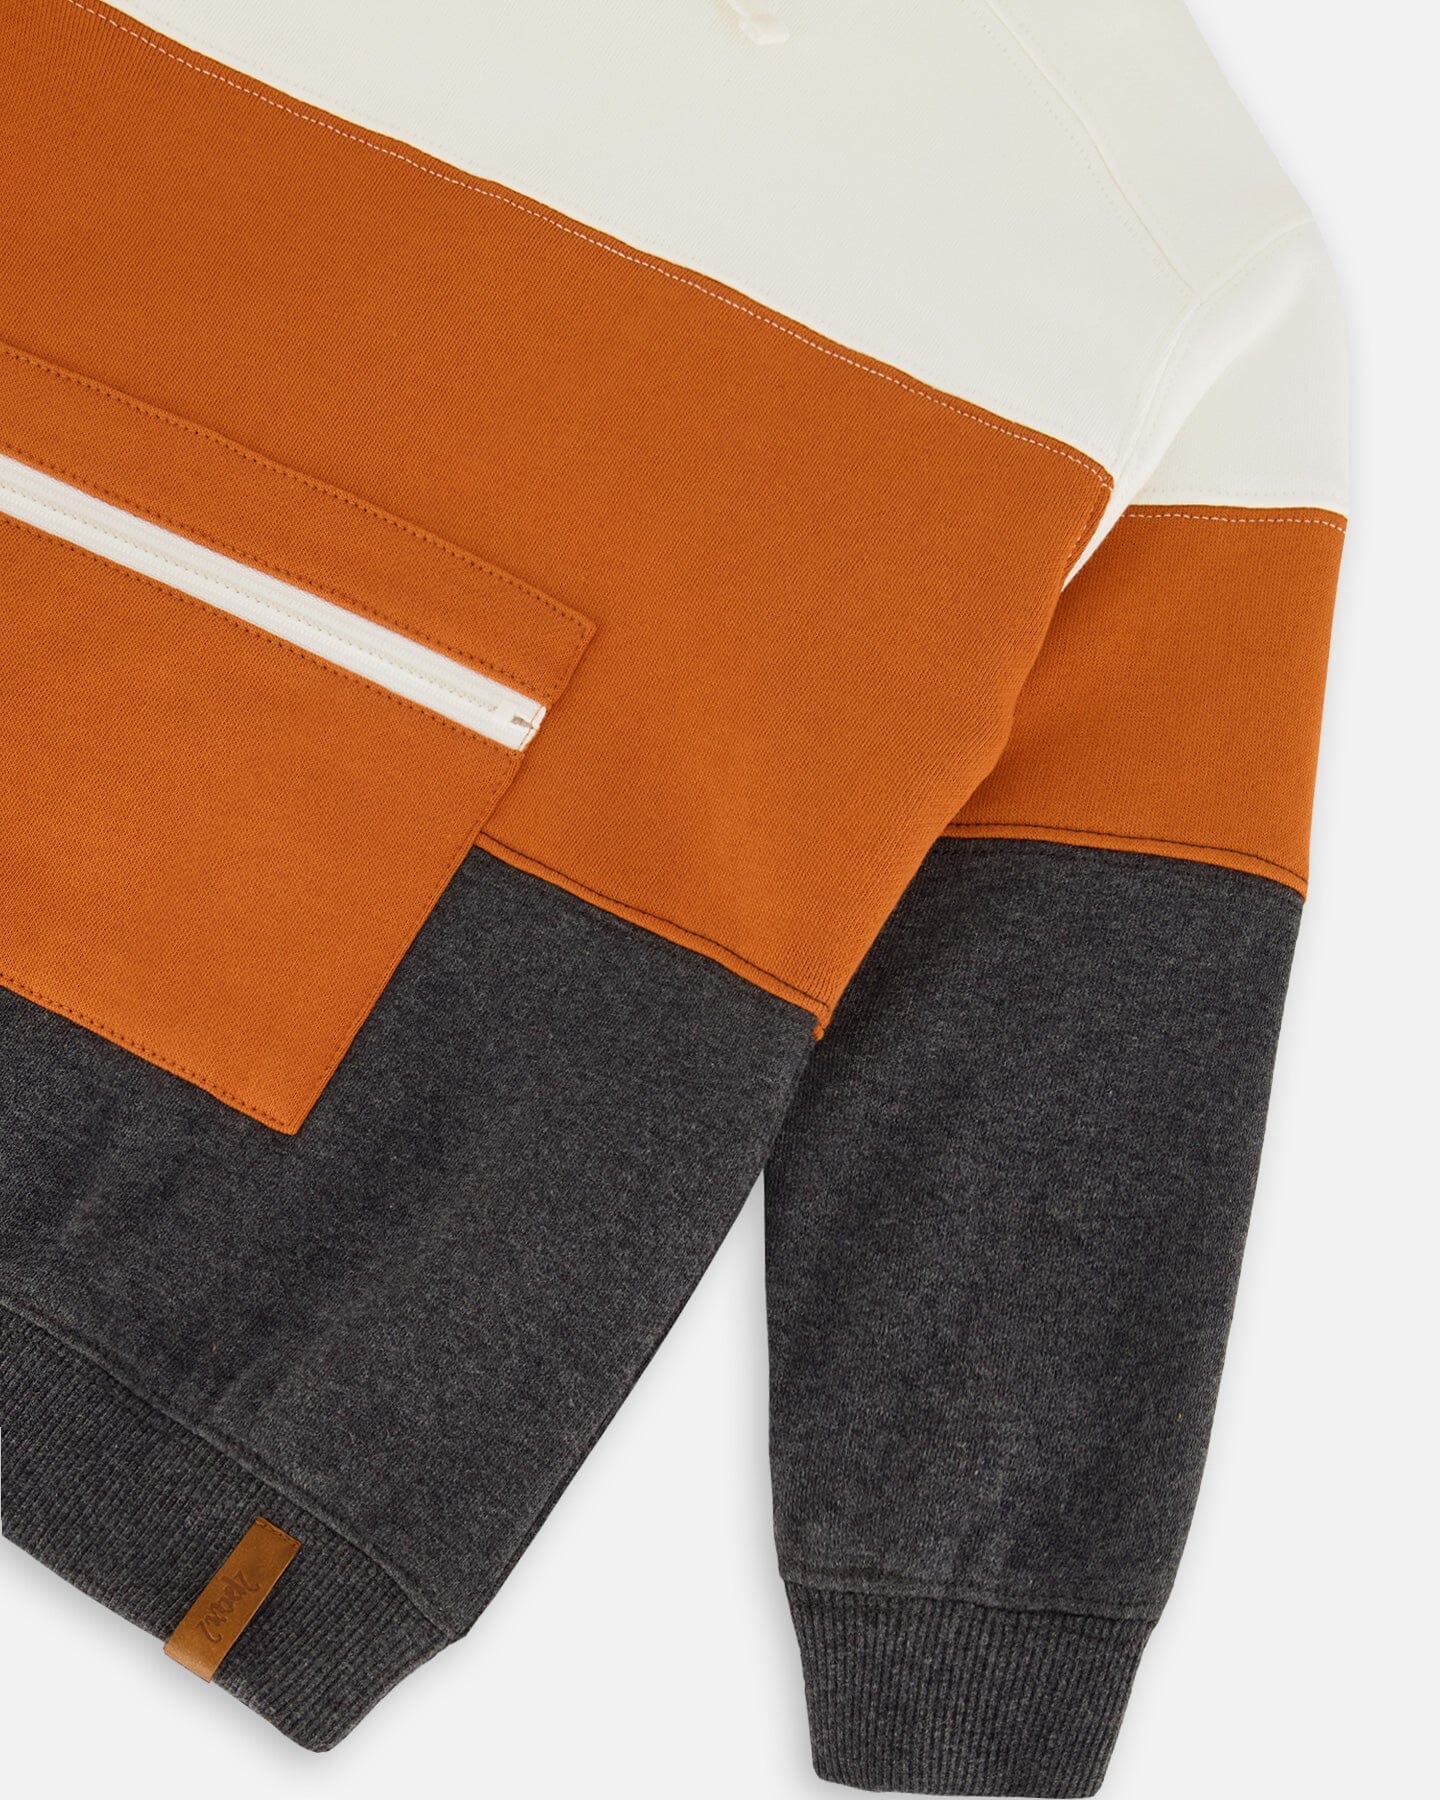 Hoodie With Zipper Pocket Grey, Brown-Orange And Off White Color Block - F20U31_959